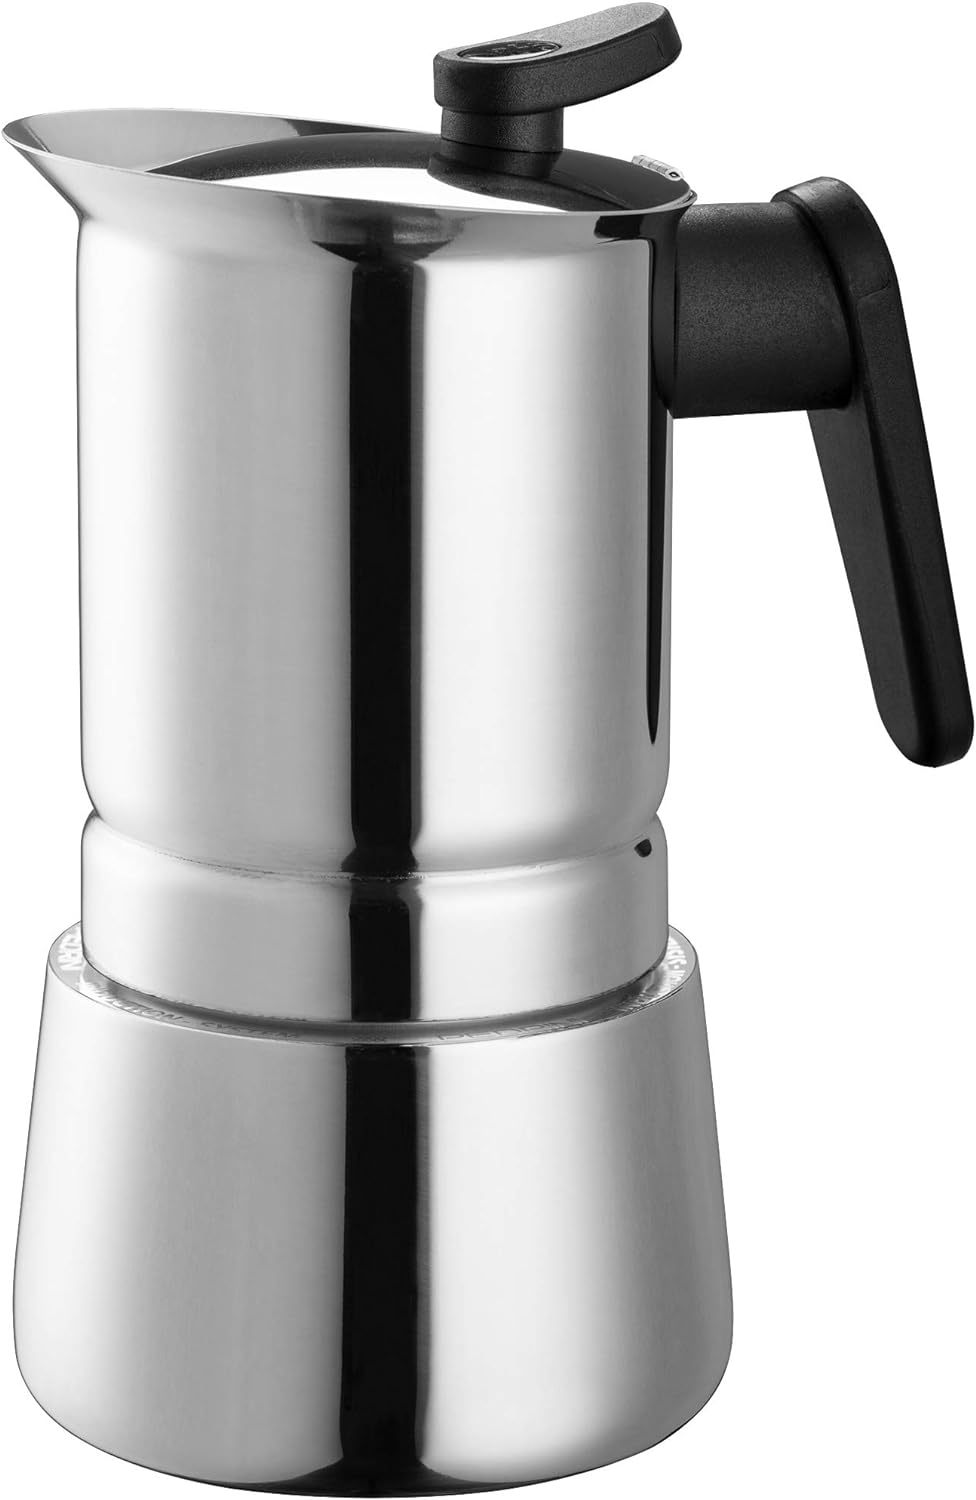 Pedrini Steelmoka, Patented Moka Espresso Machine for Hobs Including Induction, Capacity 6 Cups, Silver Color, Steel Coffee Machine, 14.4 x 10.7 x 20 cm